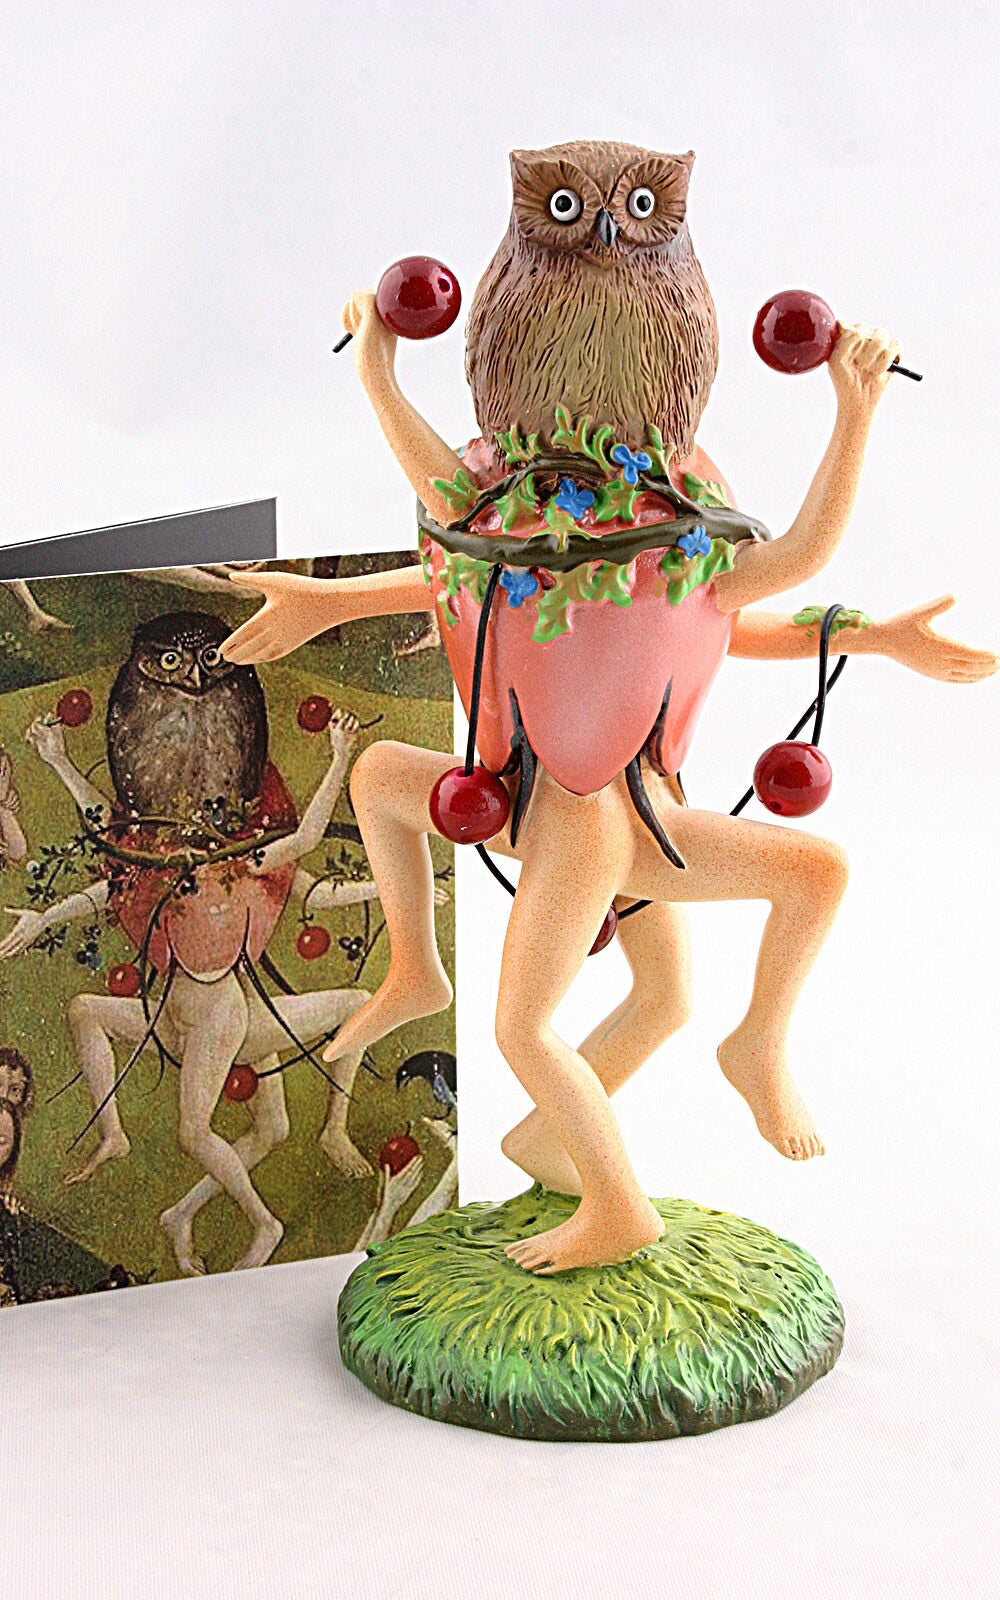 Owl Headed Dancer Figurine Statue by Hieronymus Bosch